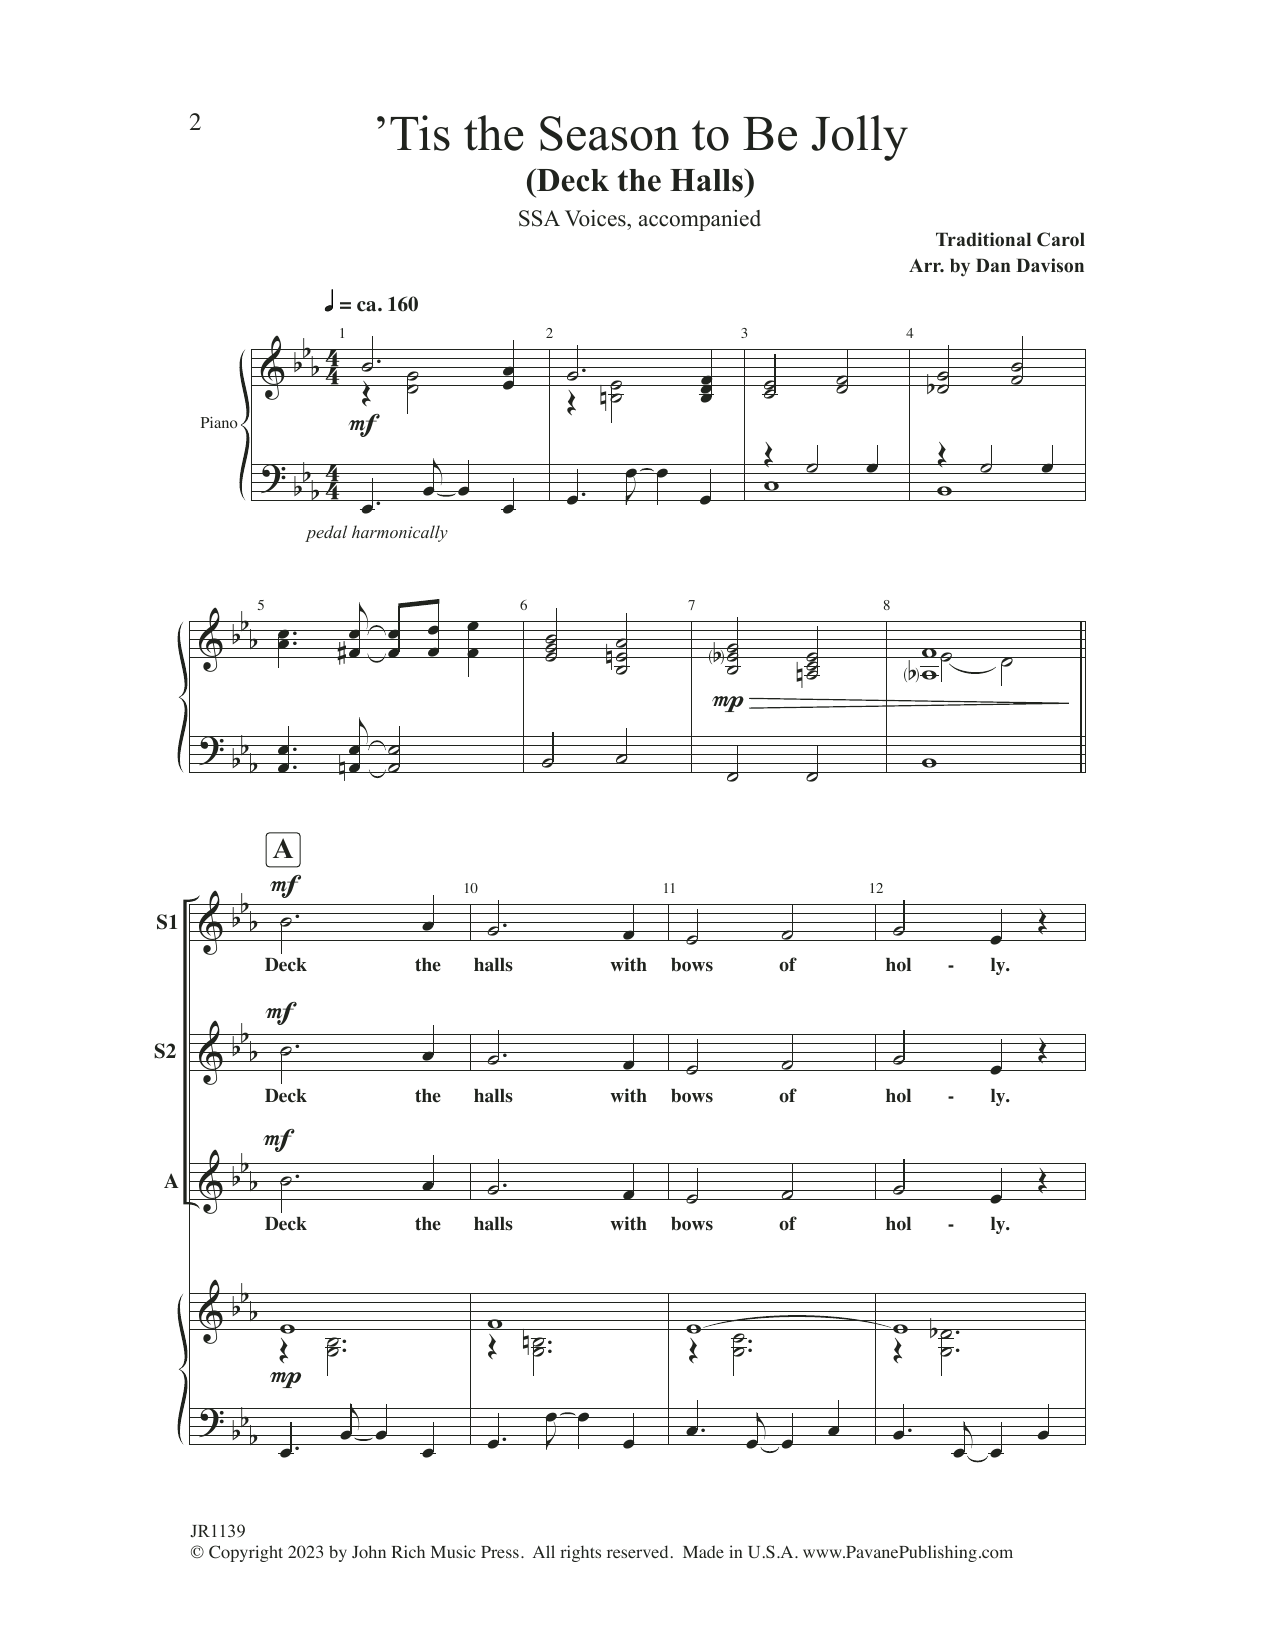 Dan Davison 'Tis The Season To Be Jolly (Deck The Halls) Sheet Music Notes & Chords for SSA Choir - Download or Print PDF